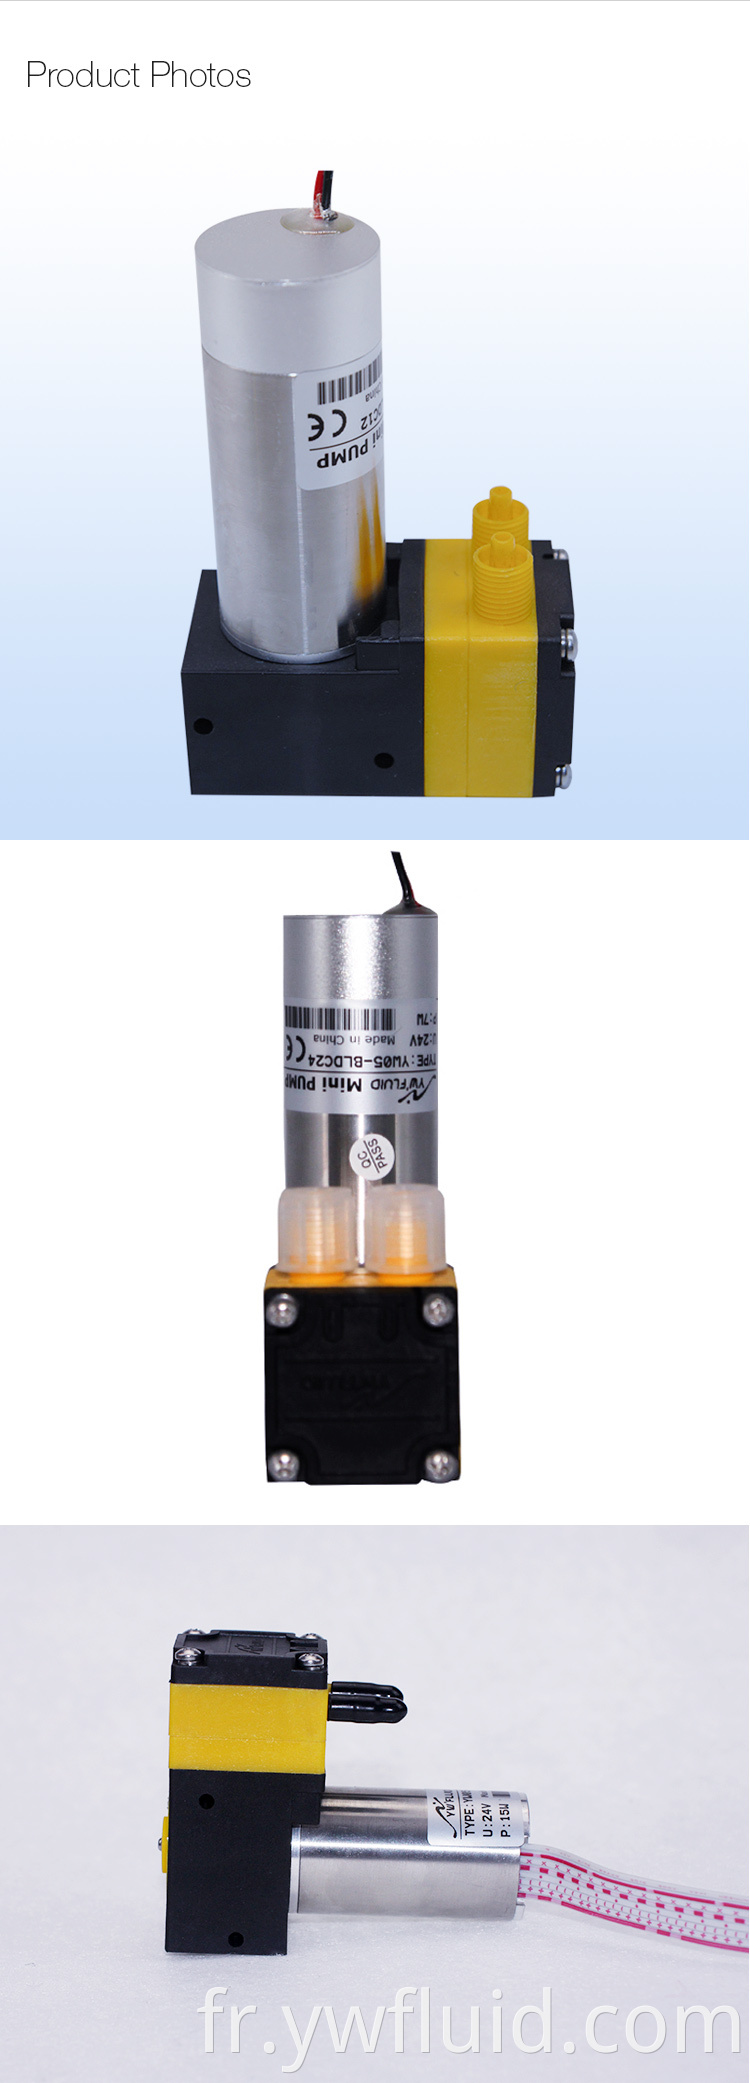 Micro BLDC Pompe à diaphragme sans balais 12 V / 24 V